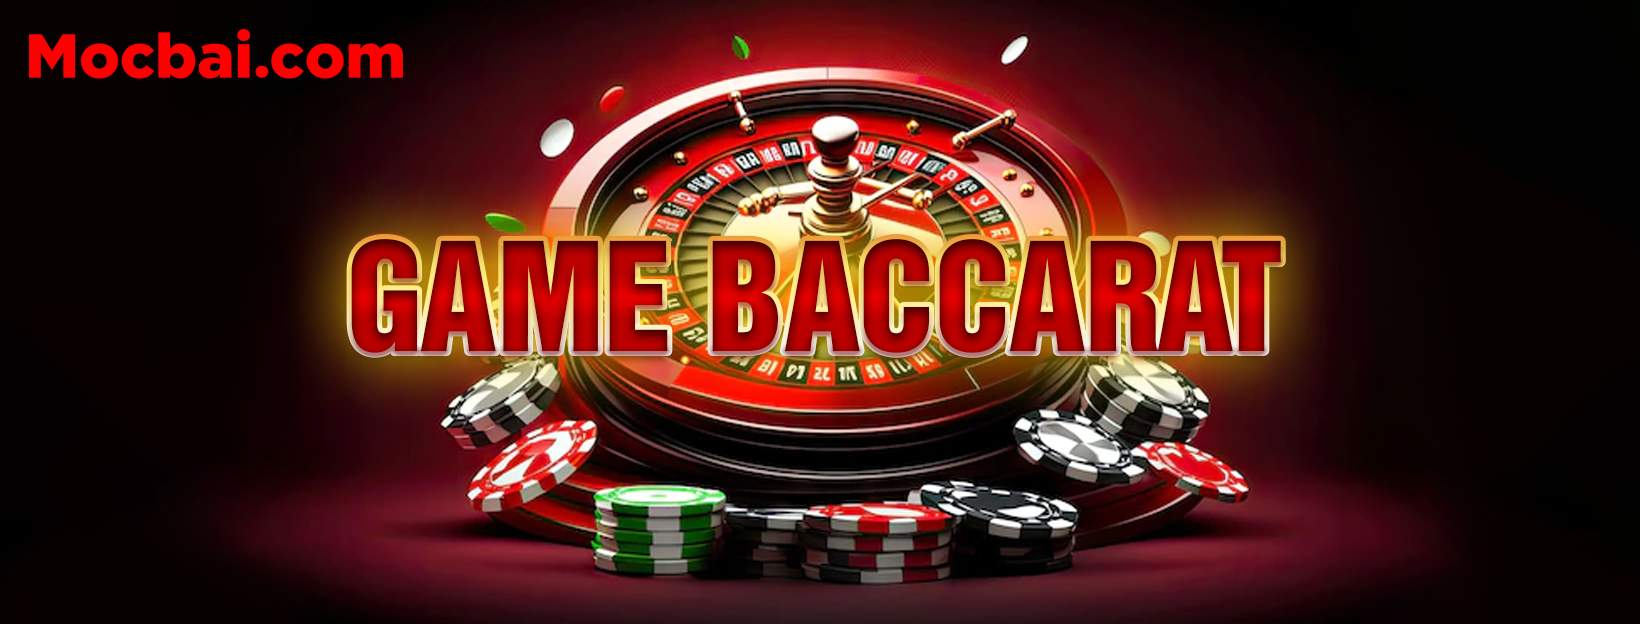 Chơi Baccarat tại casino mộc bài